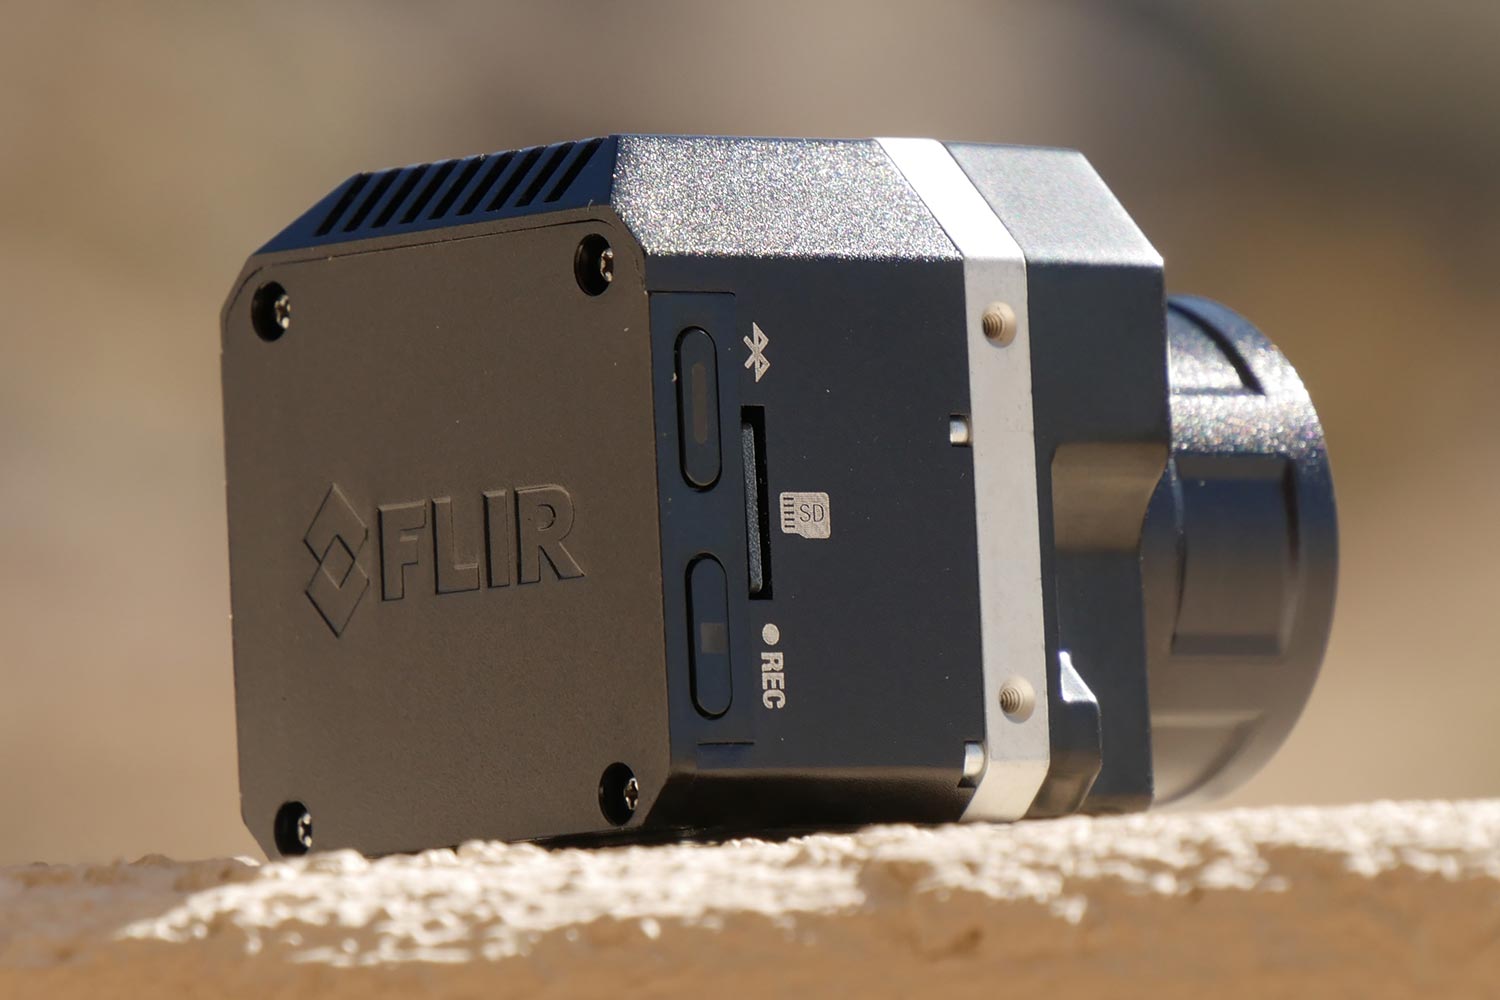 flir vue pro thermal camera for drones 9mm ntsc 30hz 2004